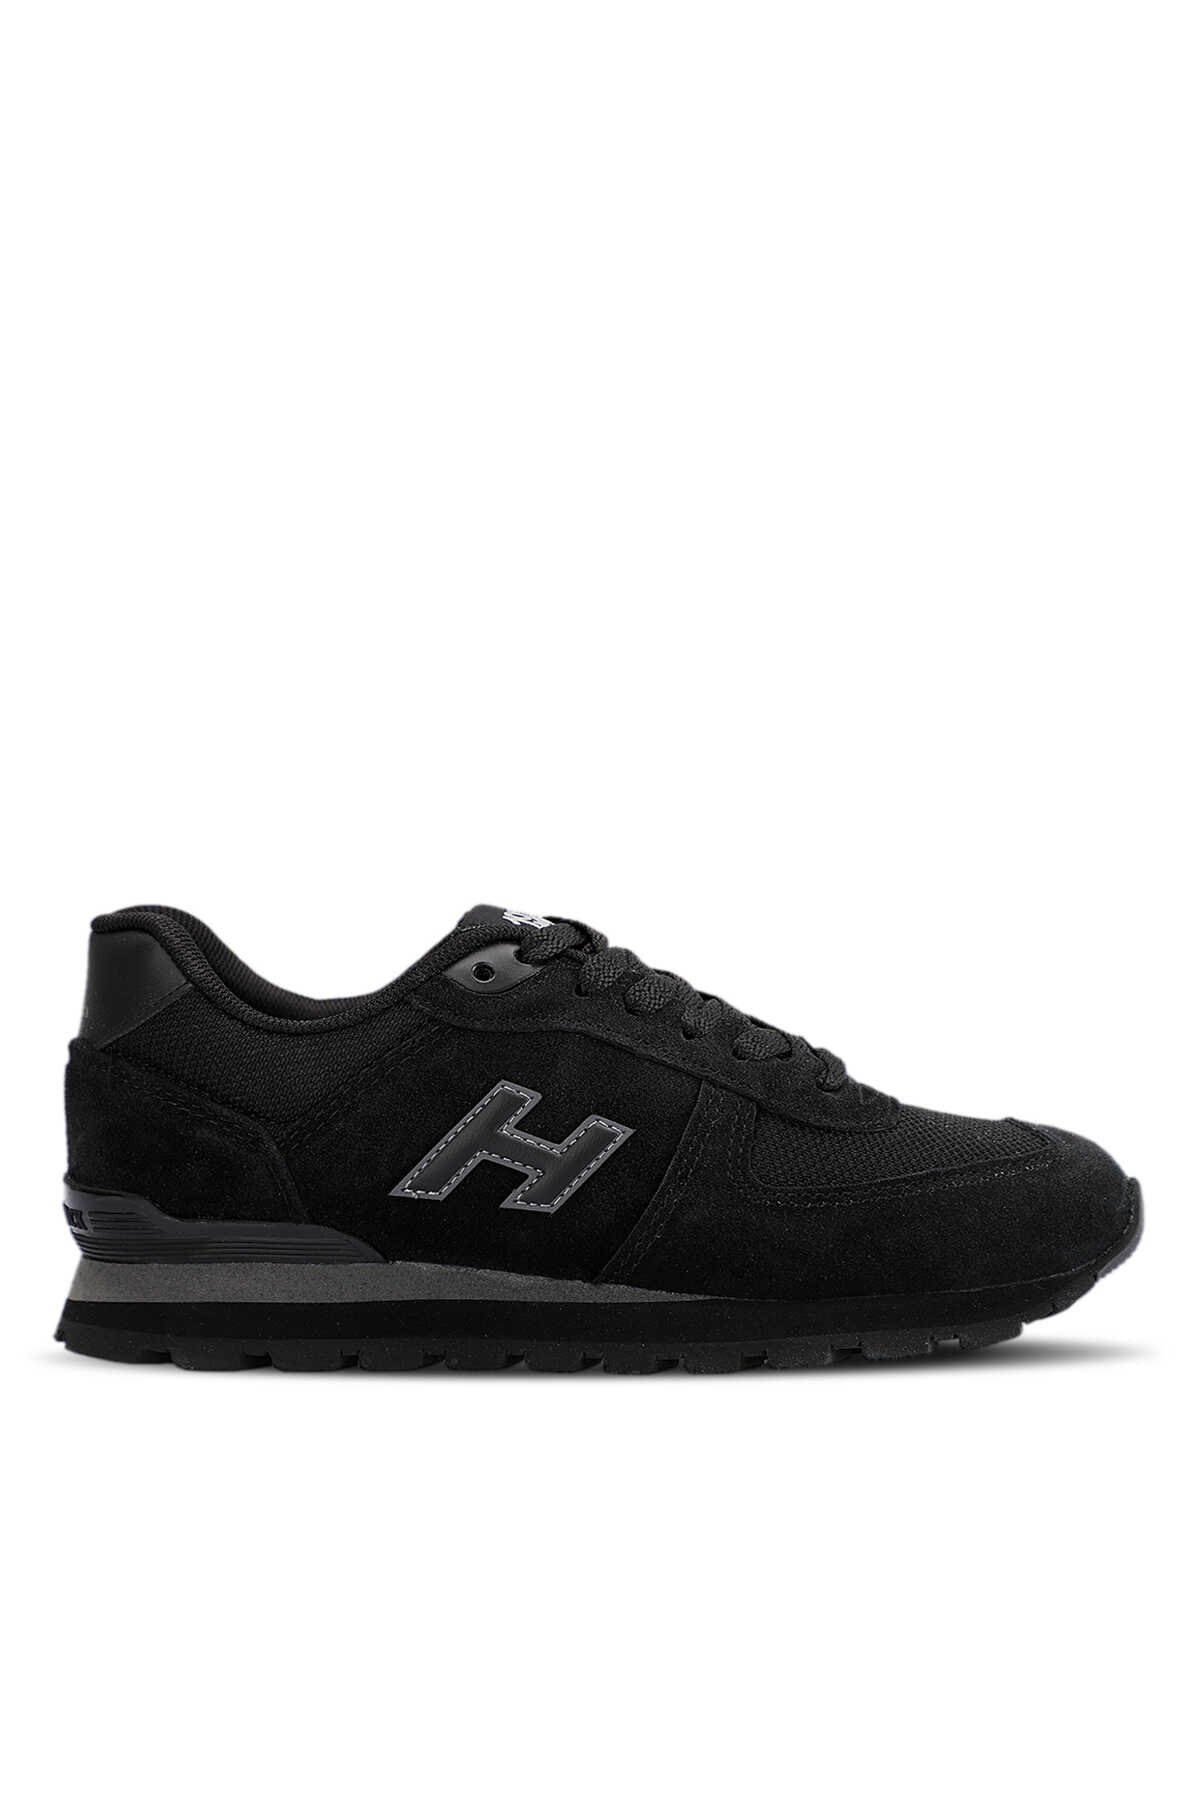 Hammer Jack - Hammer Jack PERU Sneaker Erkek Ayakkabı Siyah / Füme